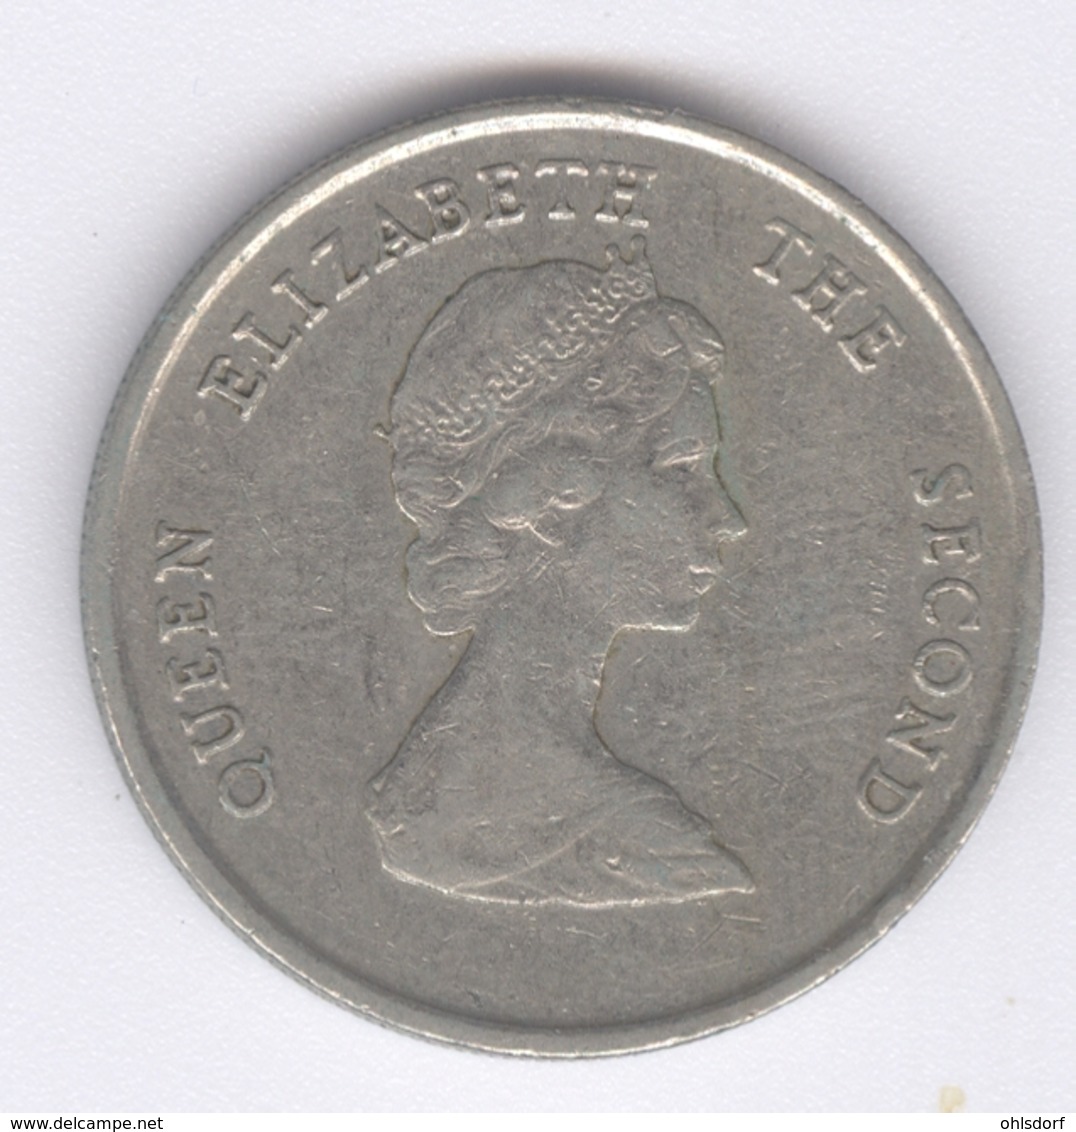 EAST CARIBBEAN STATES 1987: 25 Cents, KM 14 - Caribe Oriental (Estados Del)